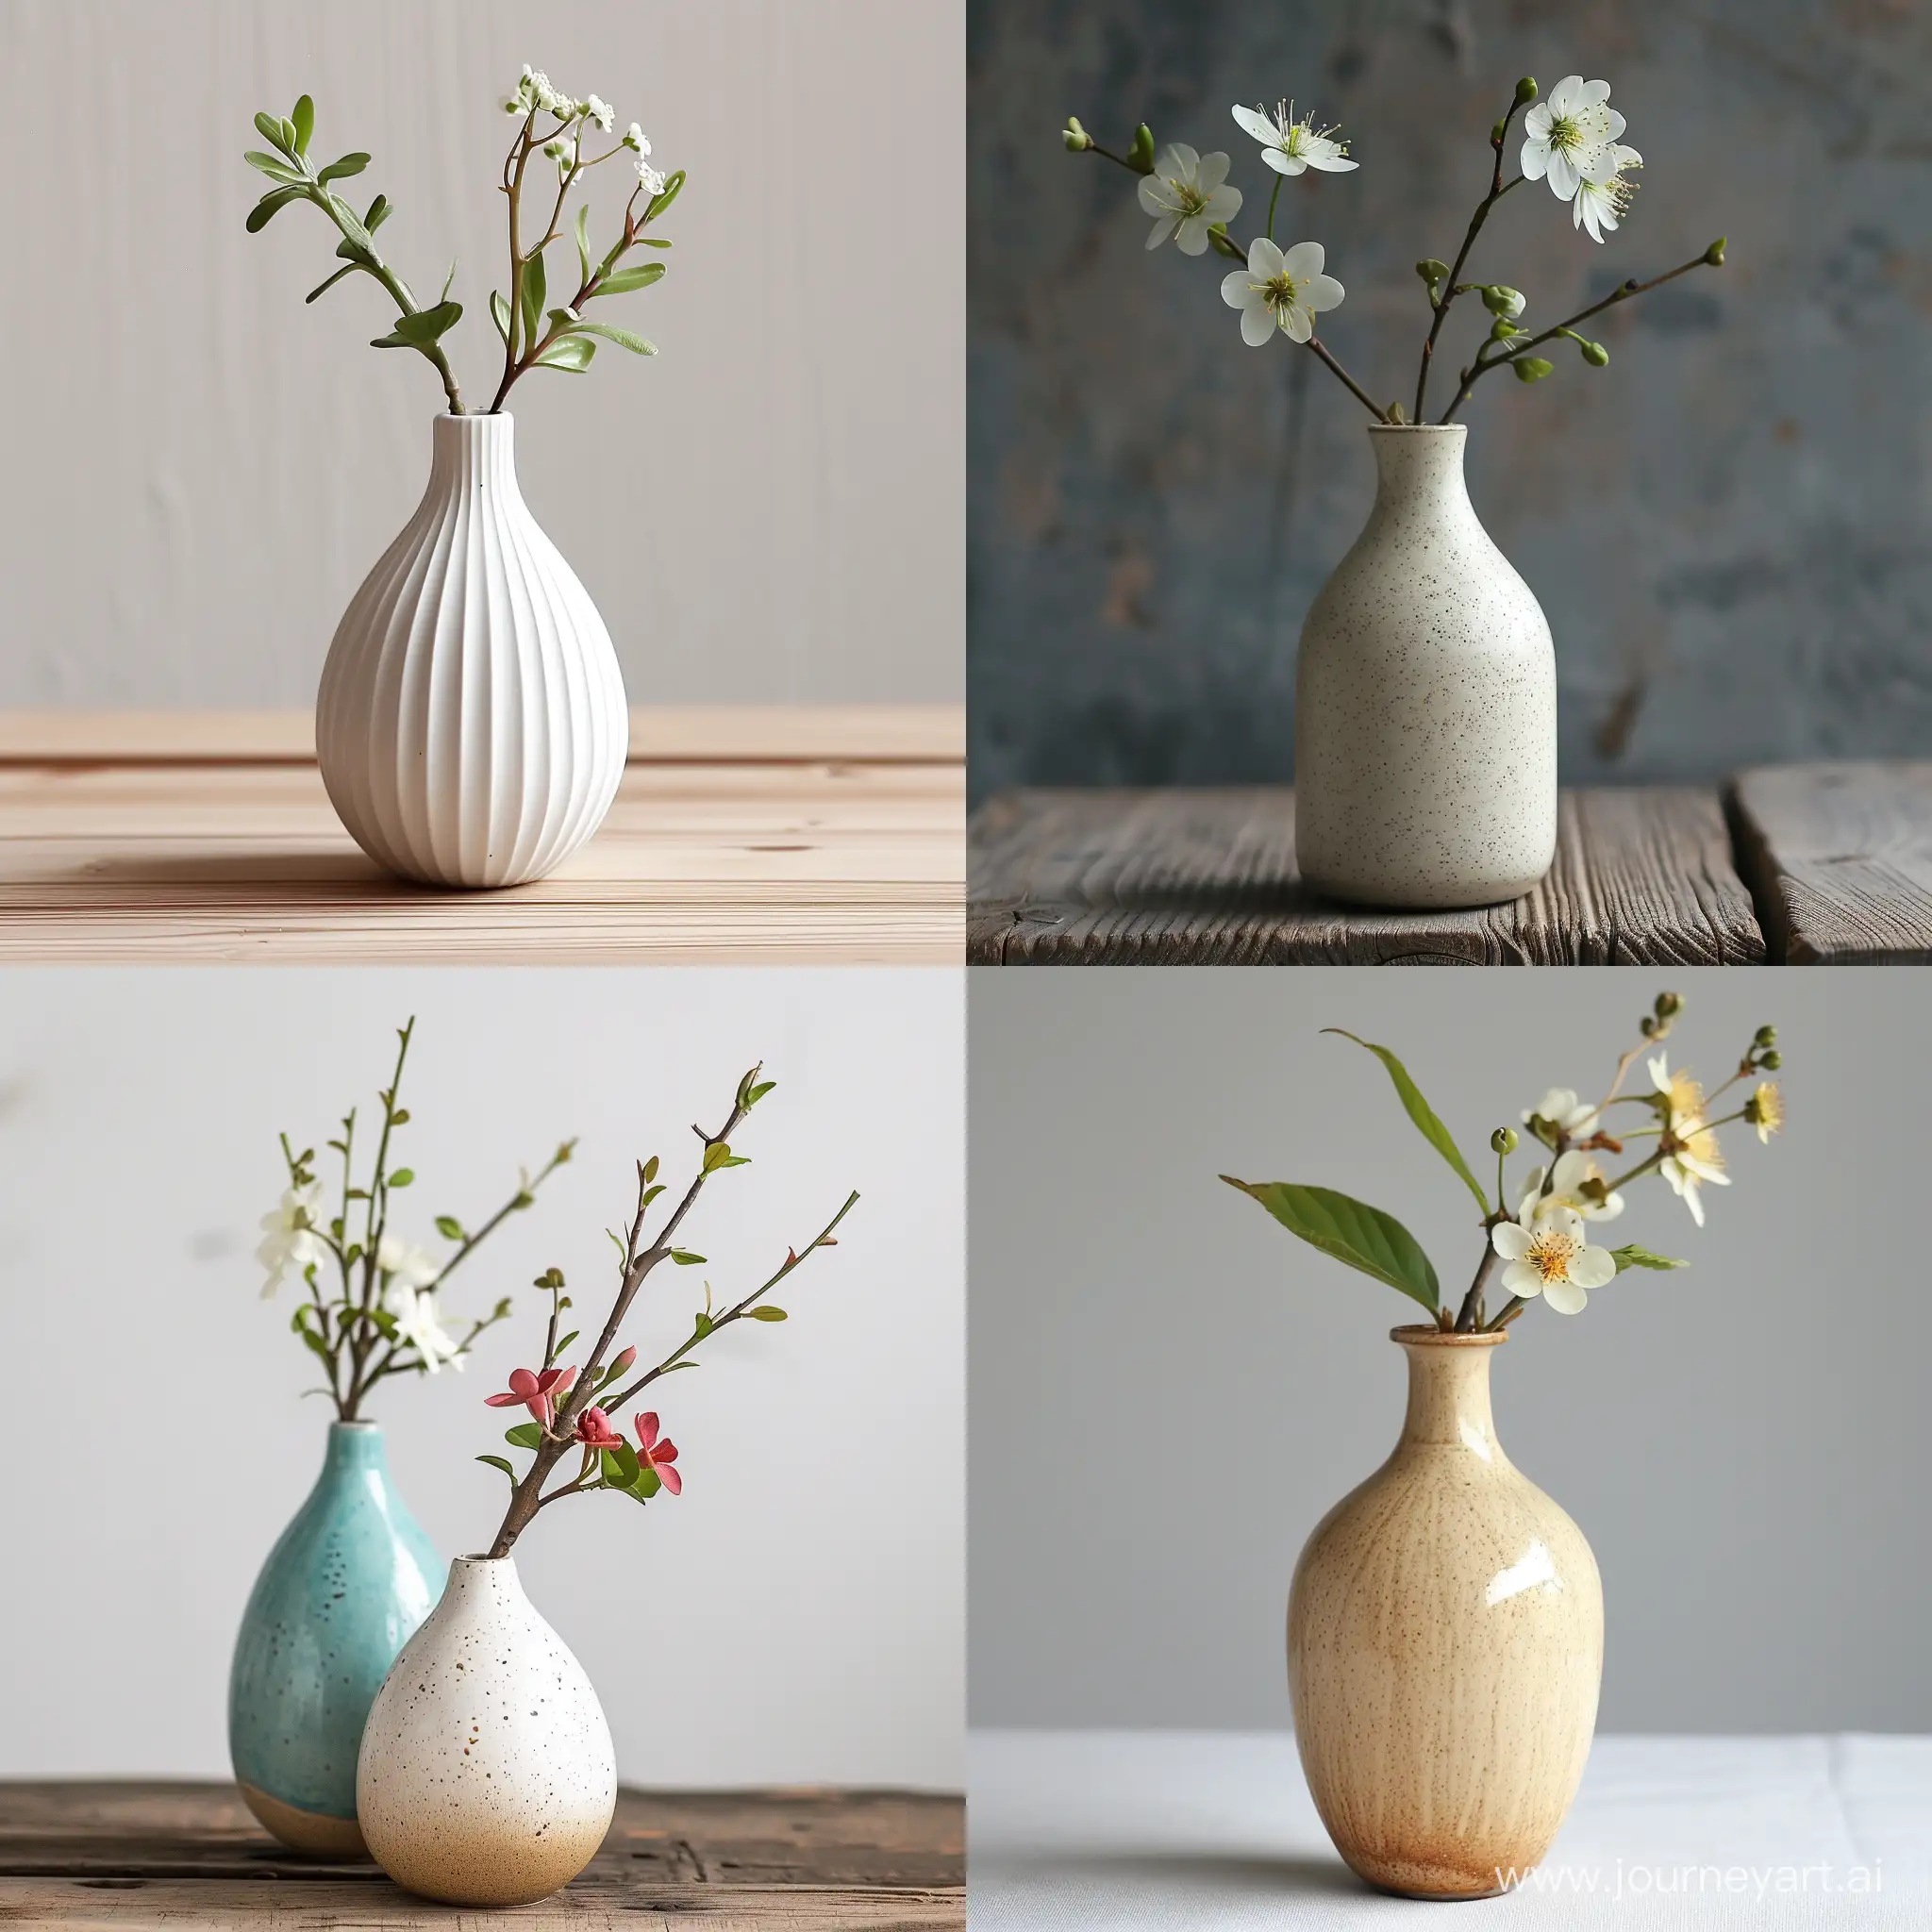 Simplified-Atmosphere-Retro-Ceramic-Vase-in-Ikea-Style